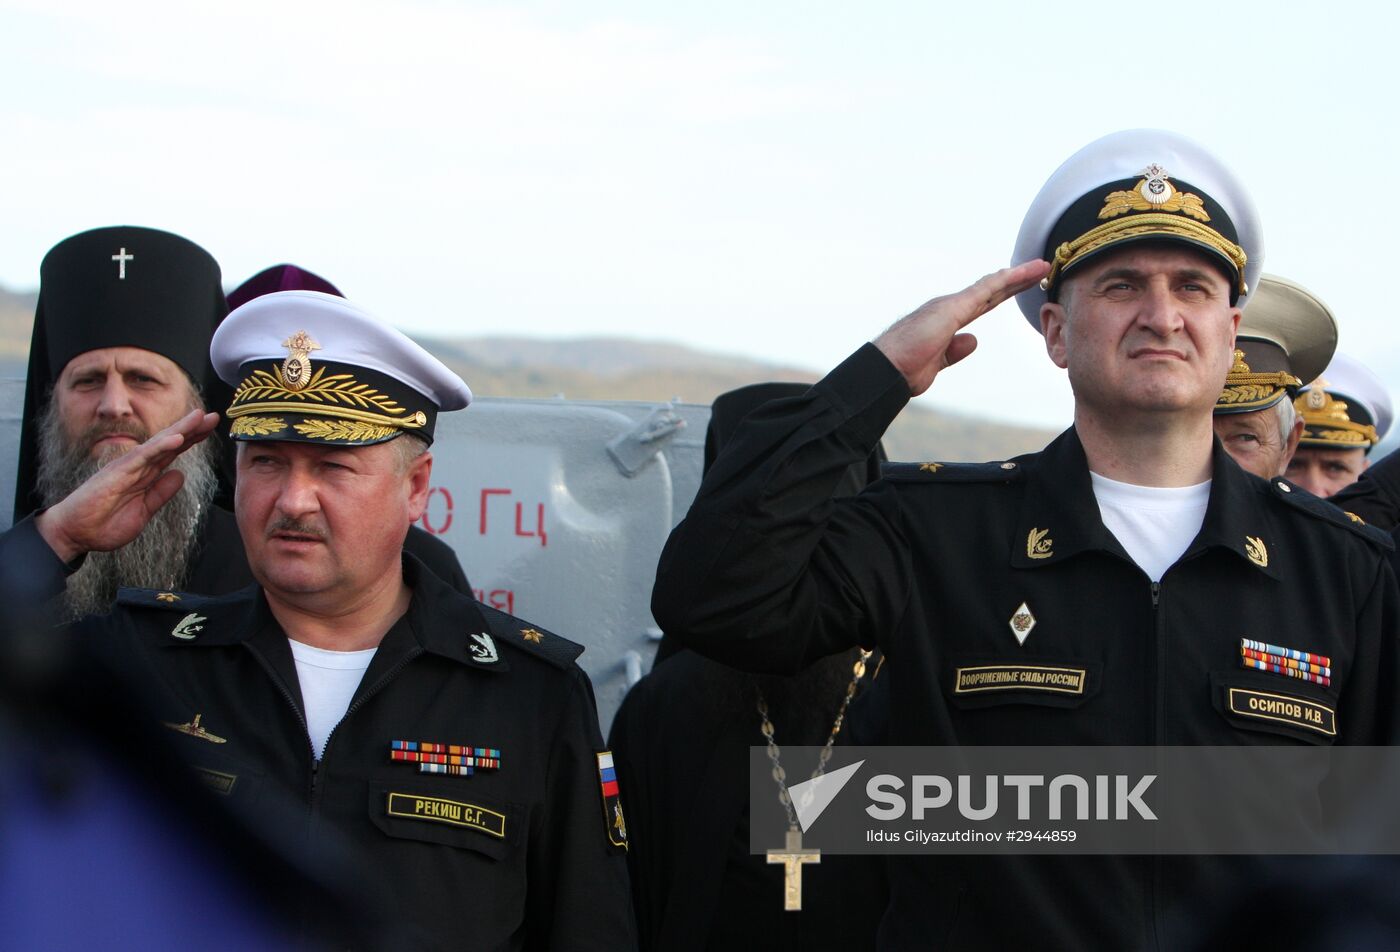 Vladimir Monomakh submarine returnd to its habitual Kamchatka base